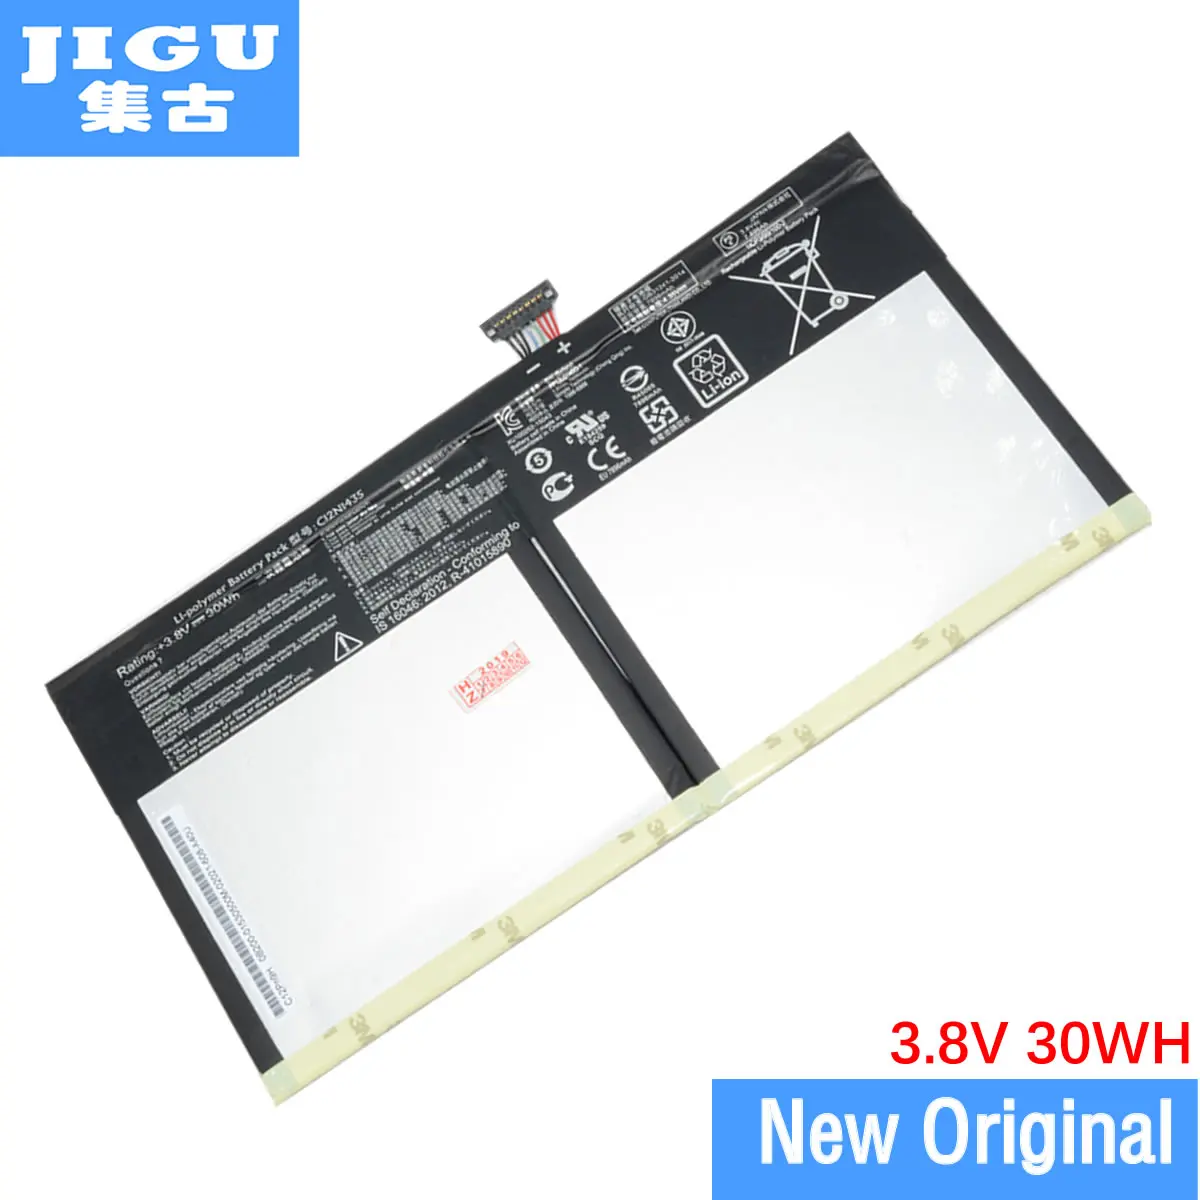 

JIGU 3.8V 30WH C12N1435 Original Laptop Battery For ASUS T100HA T100HA-FU006T For Transformer Book T100HA